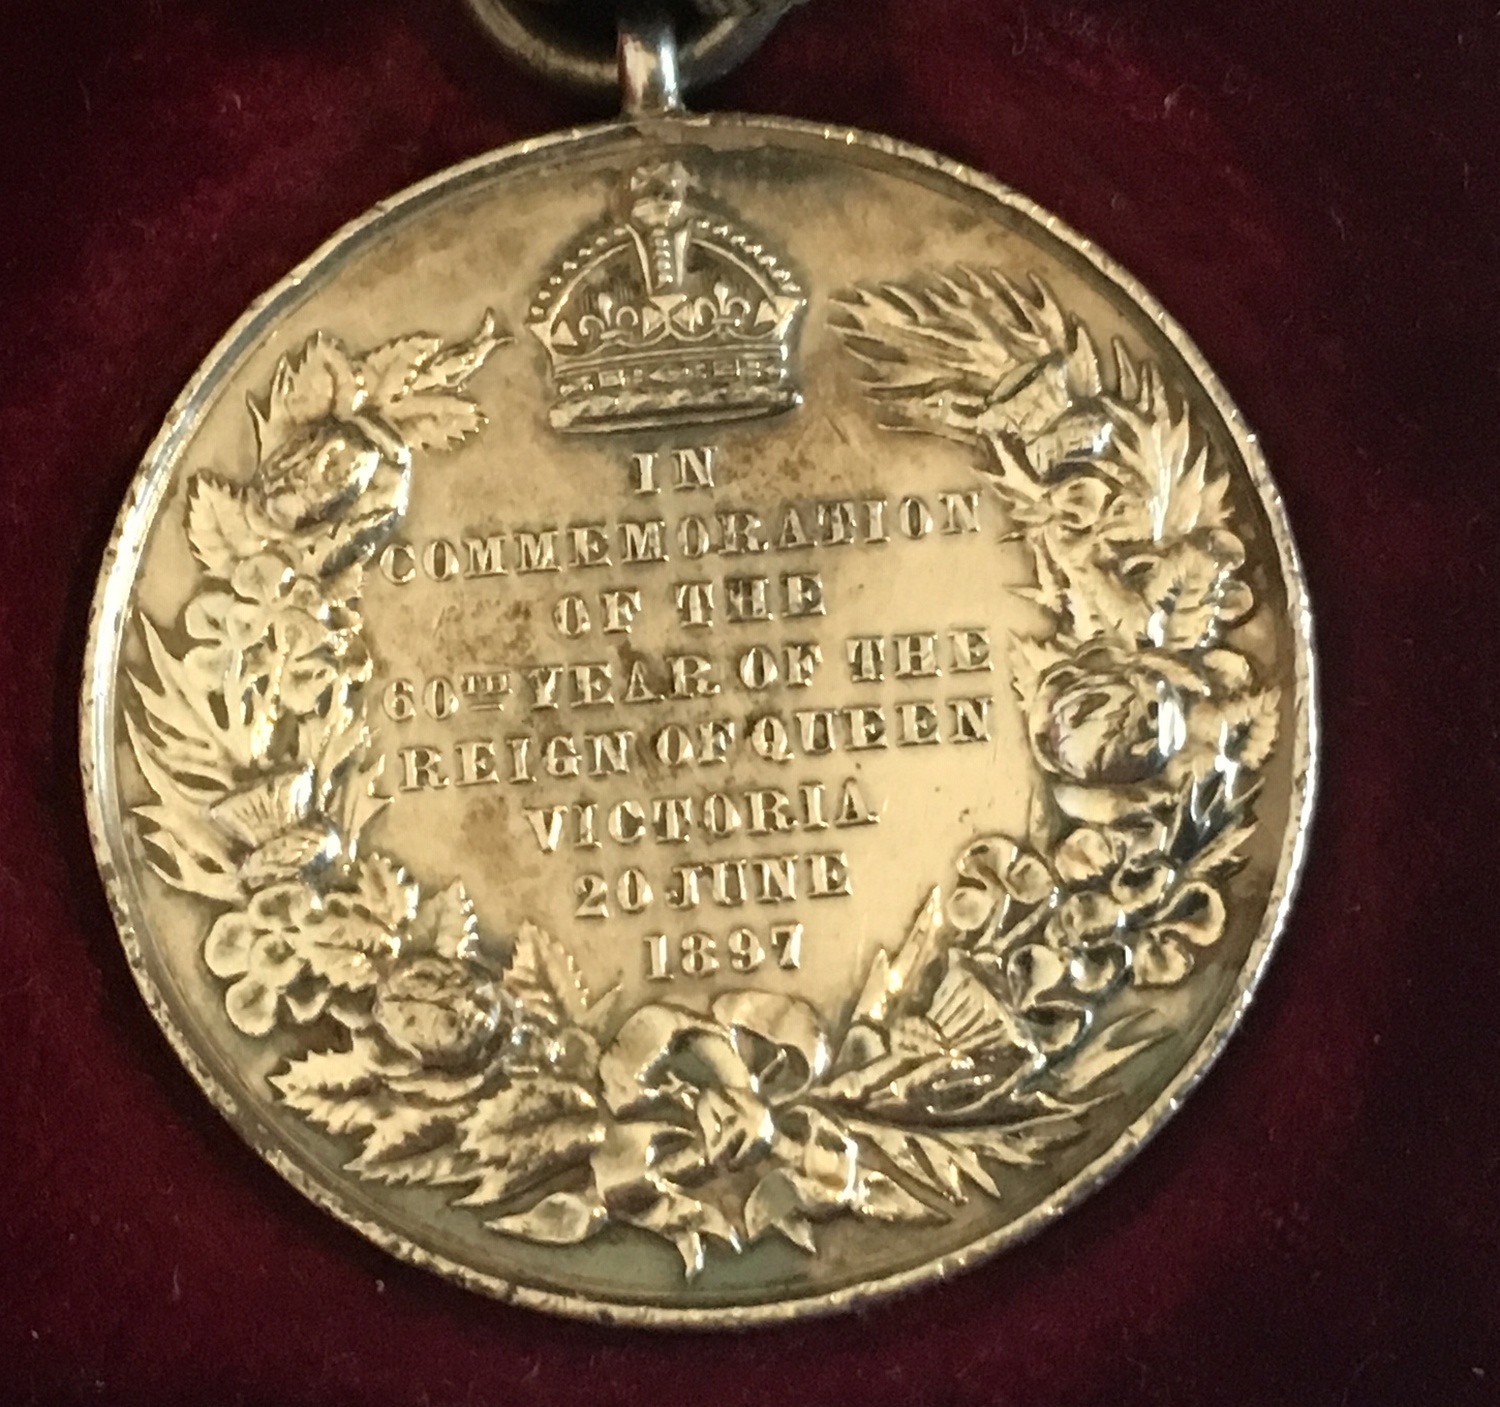 Boxed Queen Victoria 1897 Commemoration Medal.